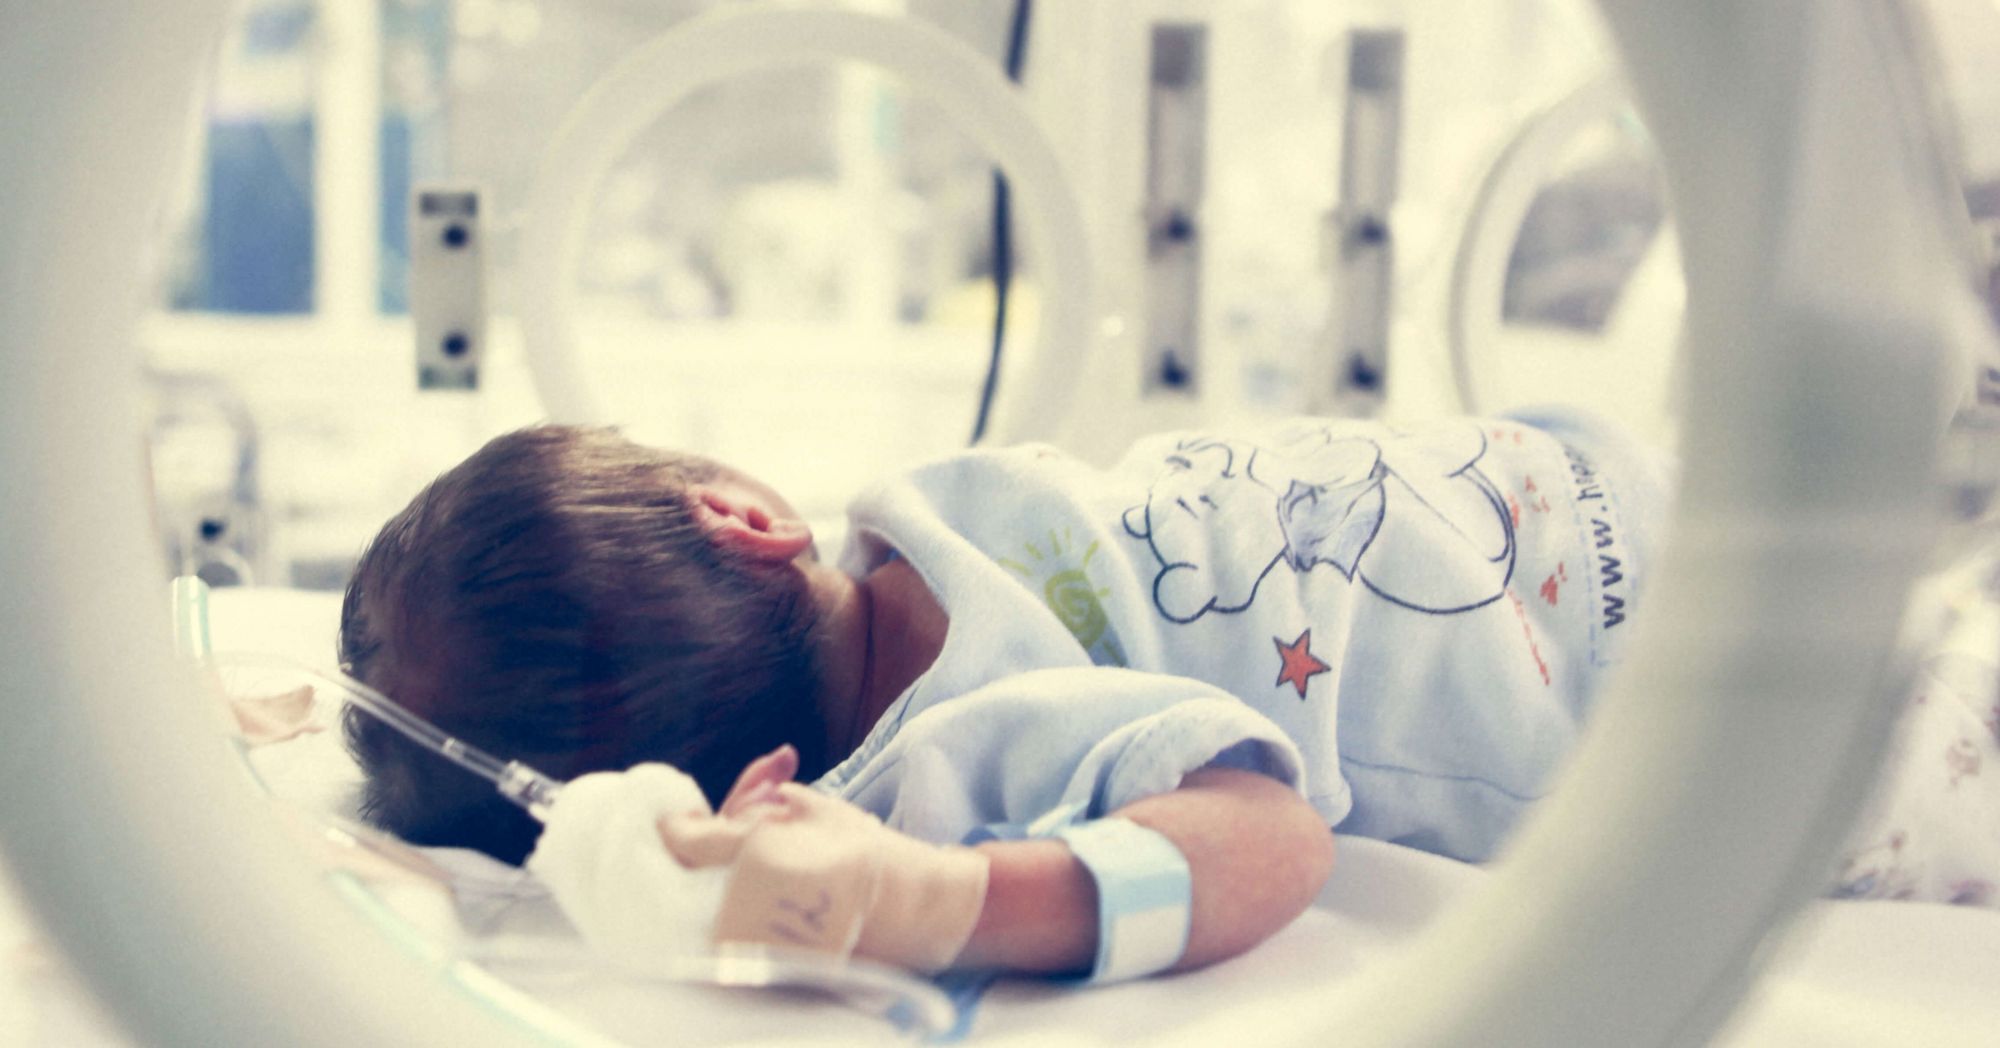 Newborn screening test developed for rare, deadly neurological